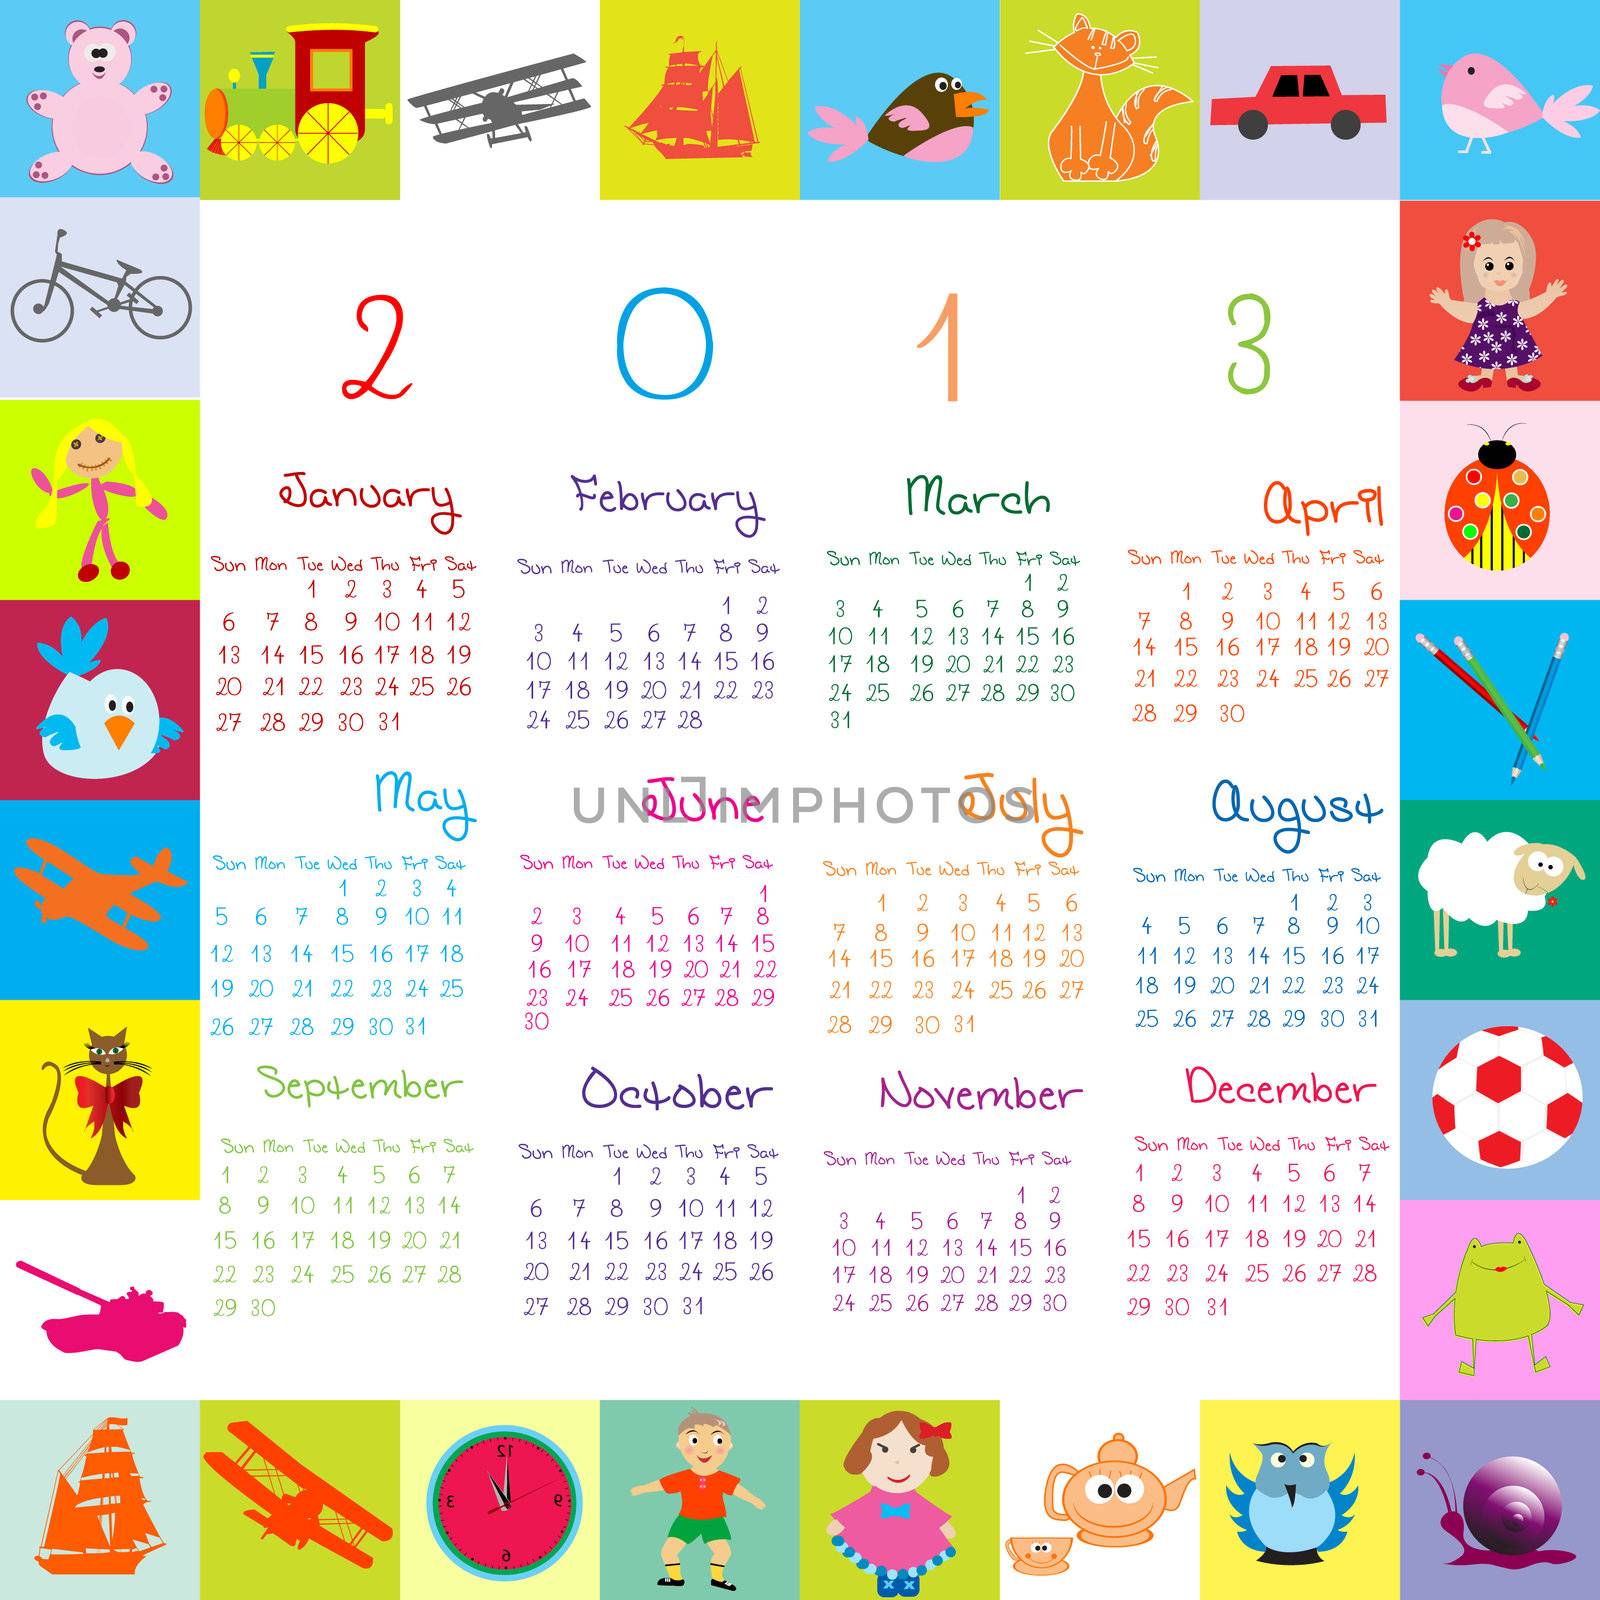 2013 calendar for kids by hibrida13